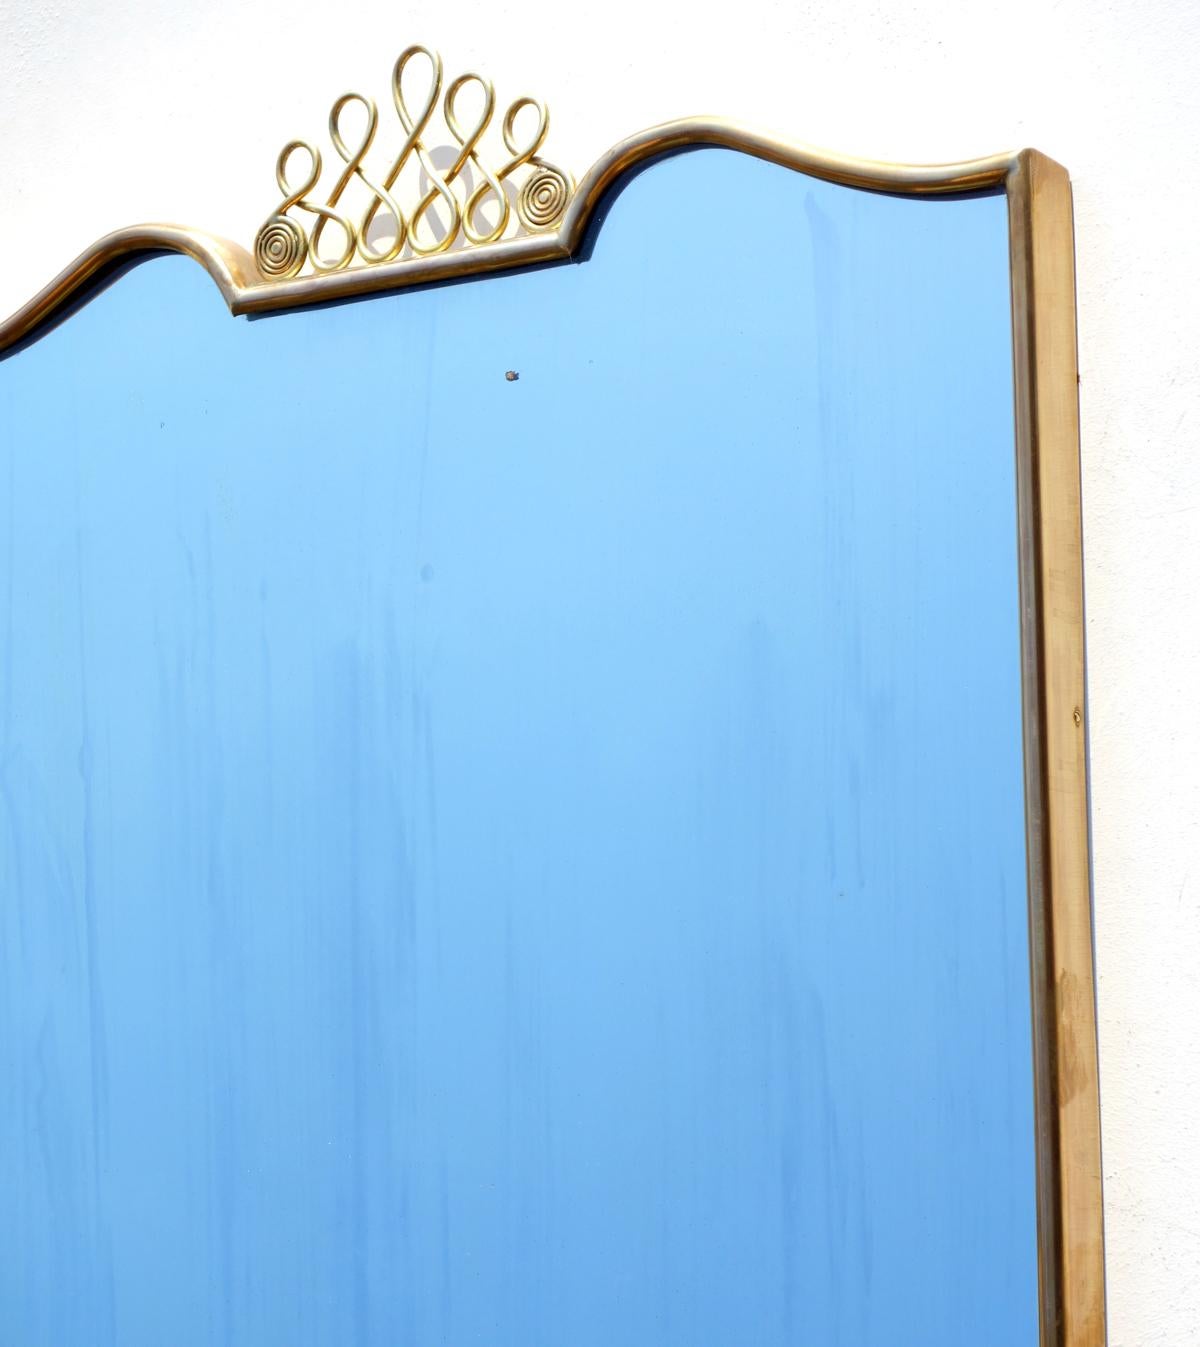 Gorgeus italian wall mirror attributed to Gio Ponti
Italy, 1950
Polish Brass frame
Excellent condition.